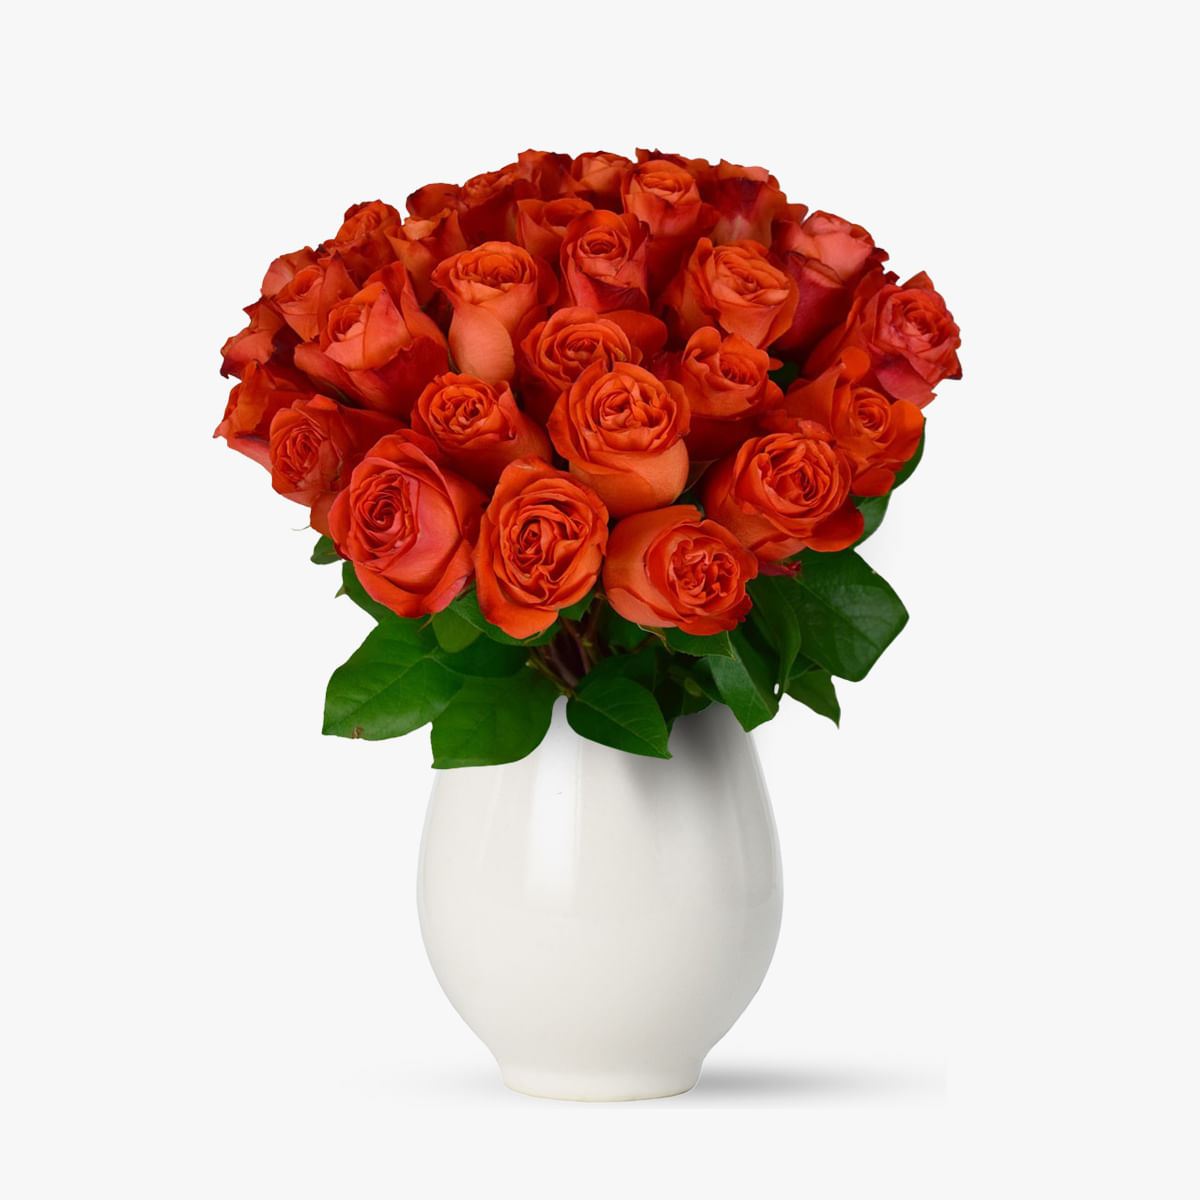 Buchet de 35 trandafiri portocalii – Standard Buchet imagine 2022